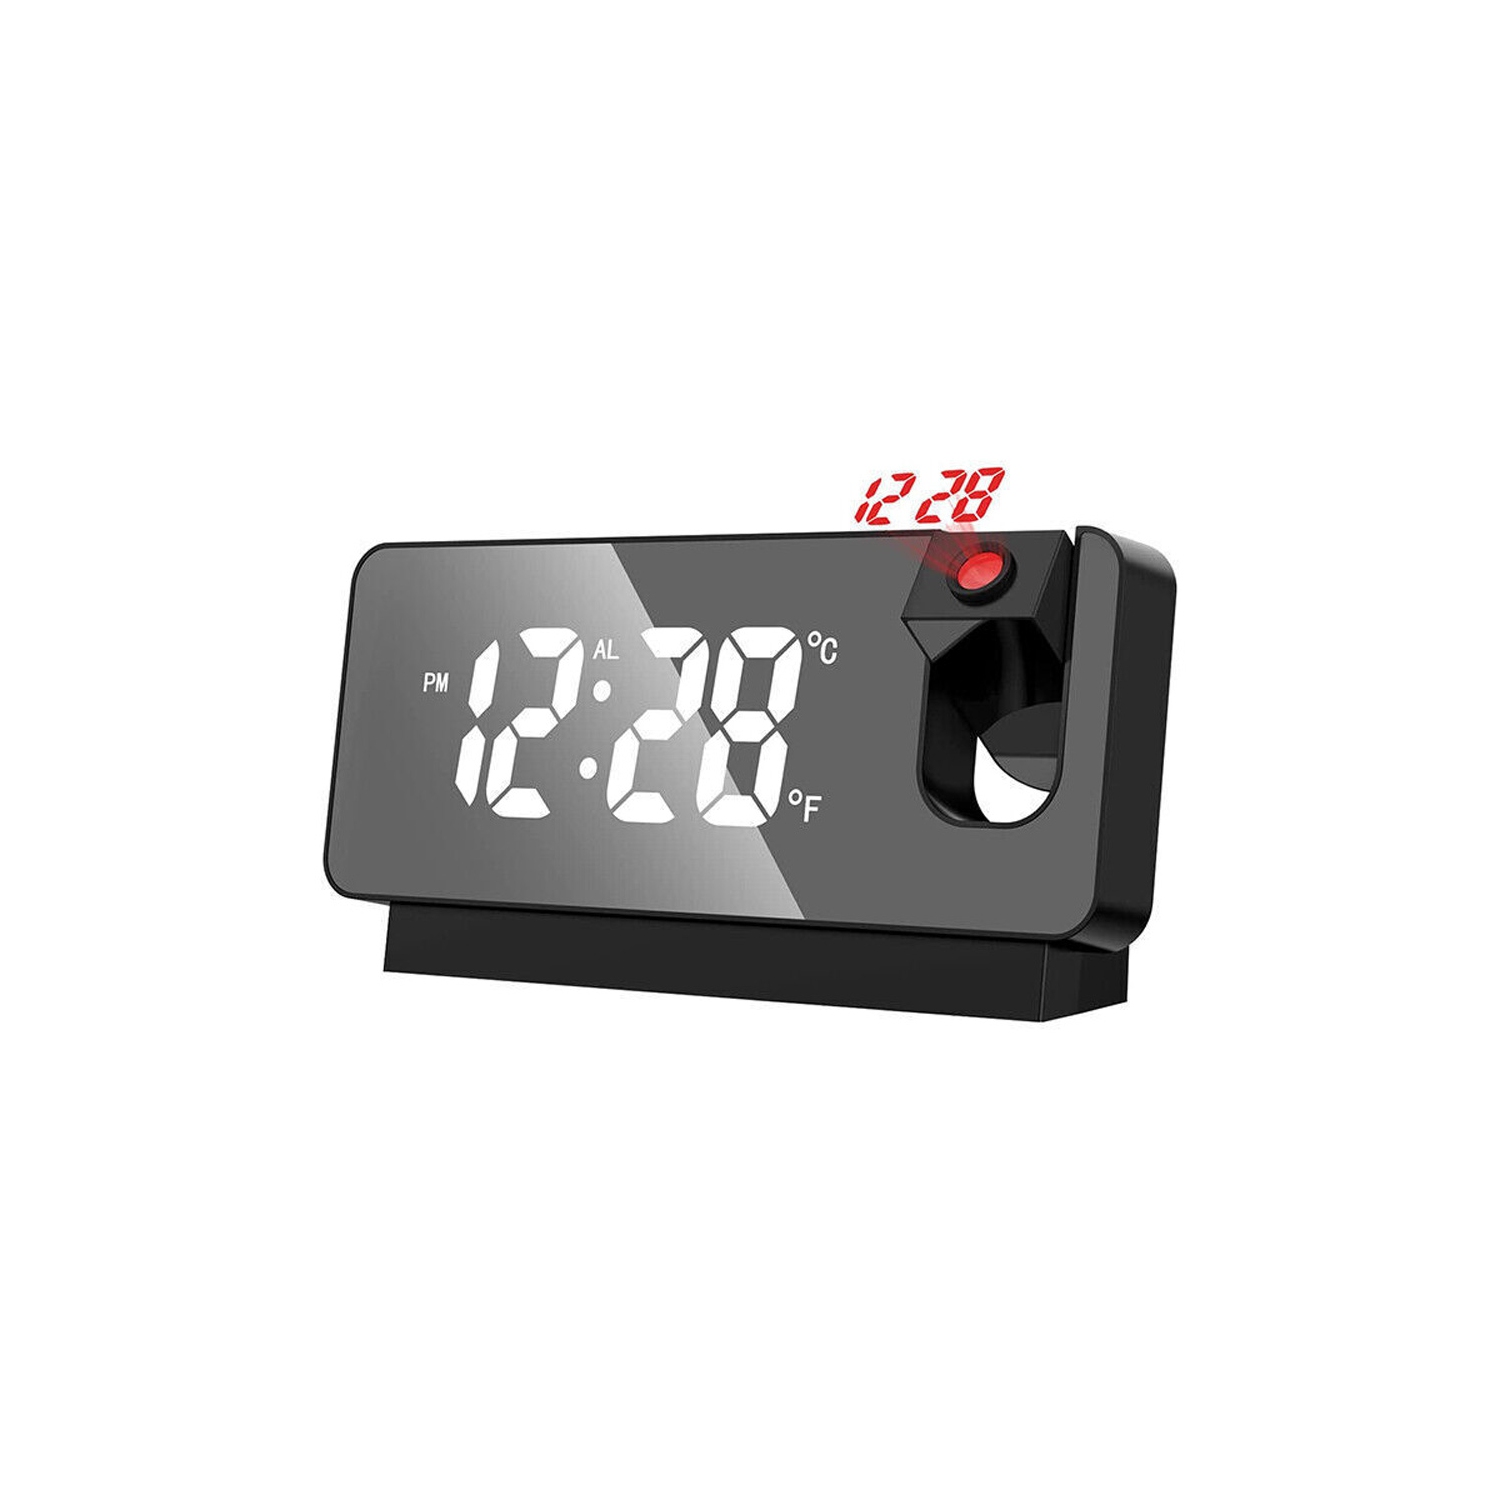 axGear Portable Projection Alarm Clock USB Powered Bedside Clock Quiet Sleeping Clocks - Black